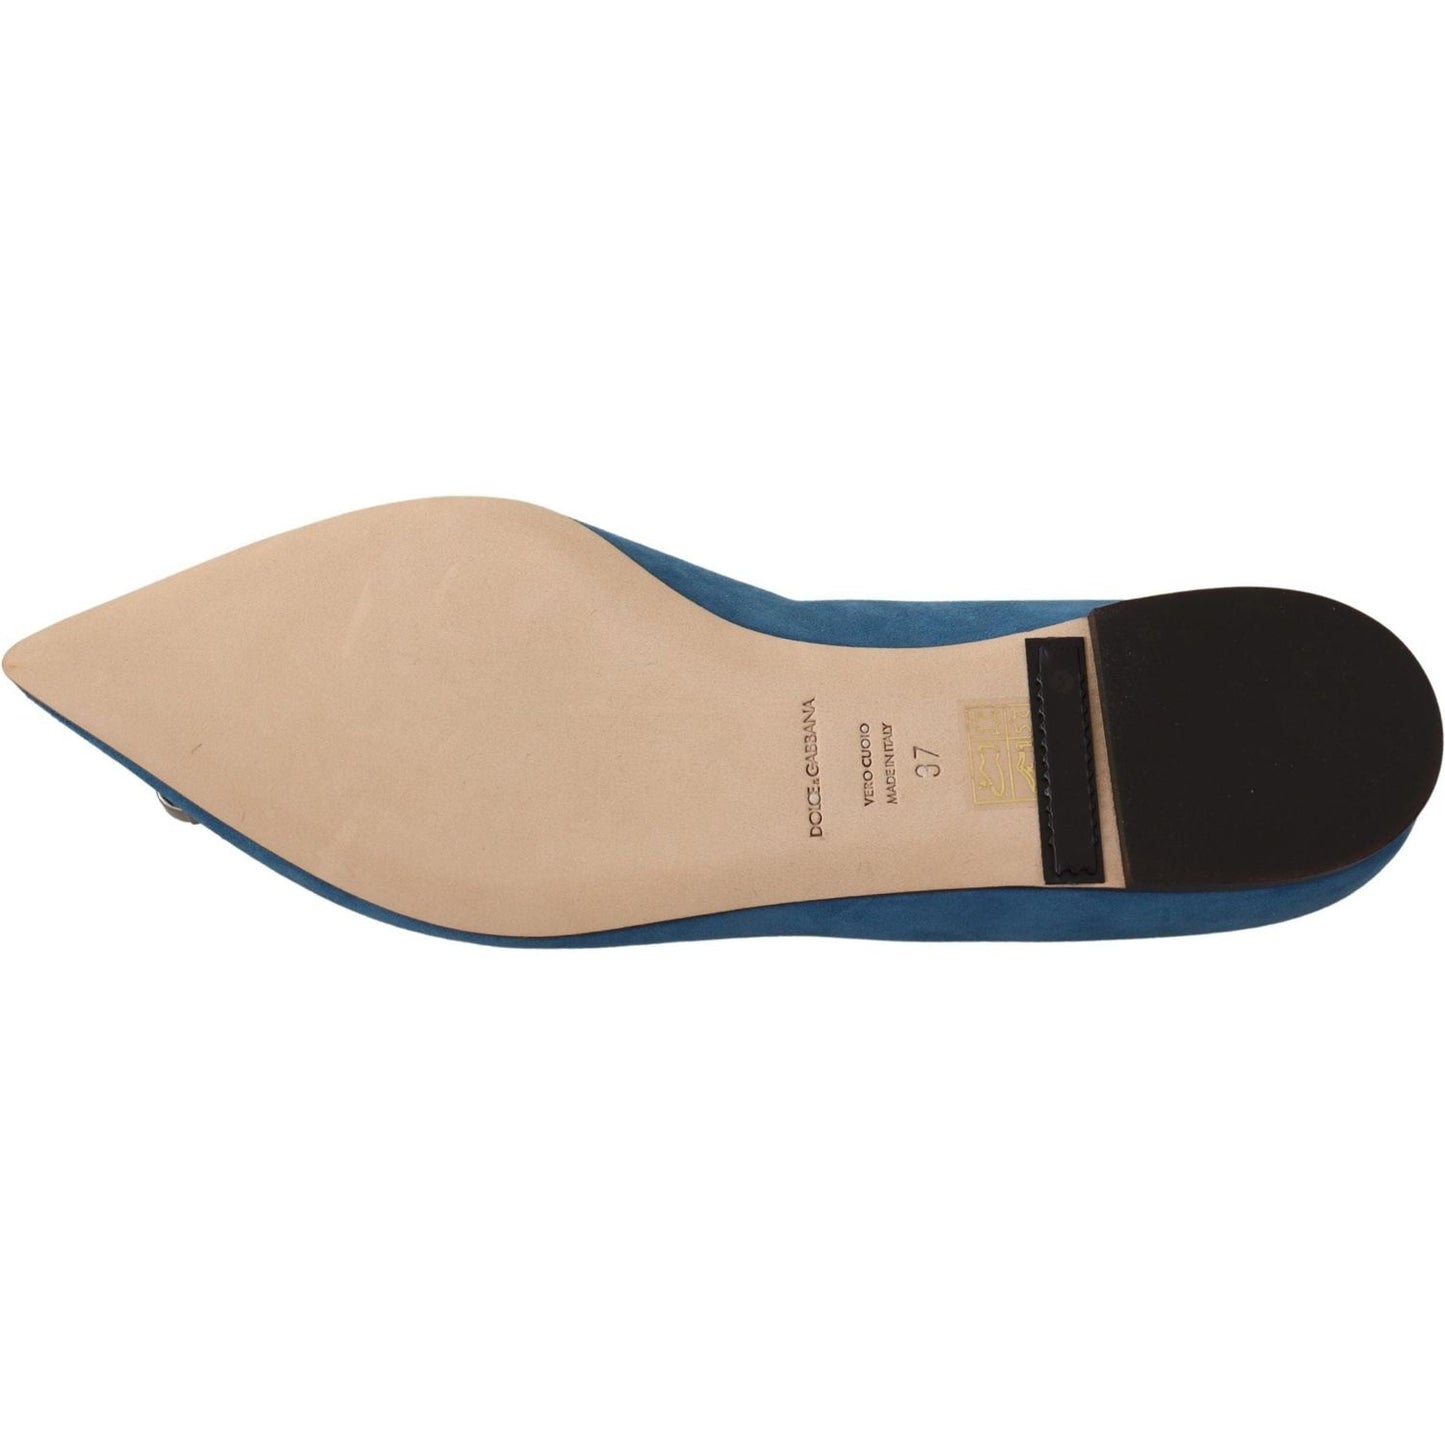 Dolce & Gabbana Elegant Crystal-Embellished Suede Flats blue-suede-crystals-loafers-flats-shoes IMG_5788-scaled-113749ed-9ce.jpg